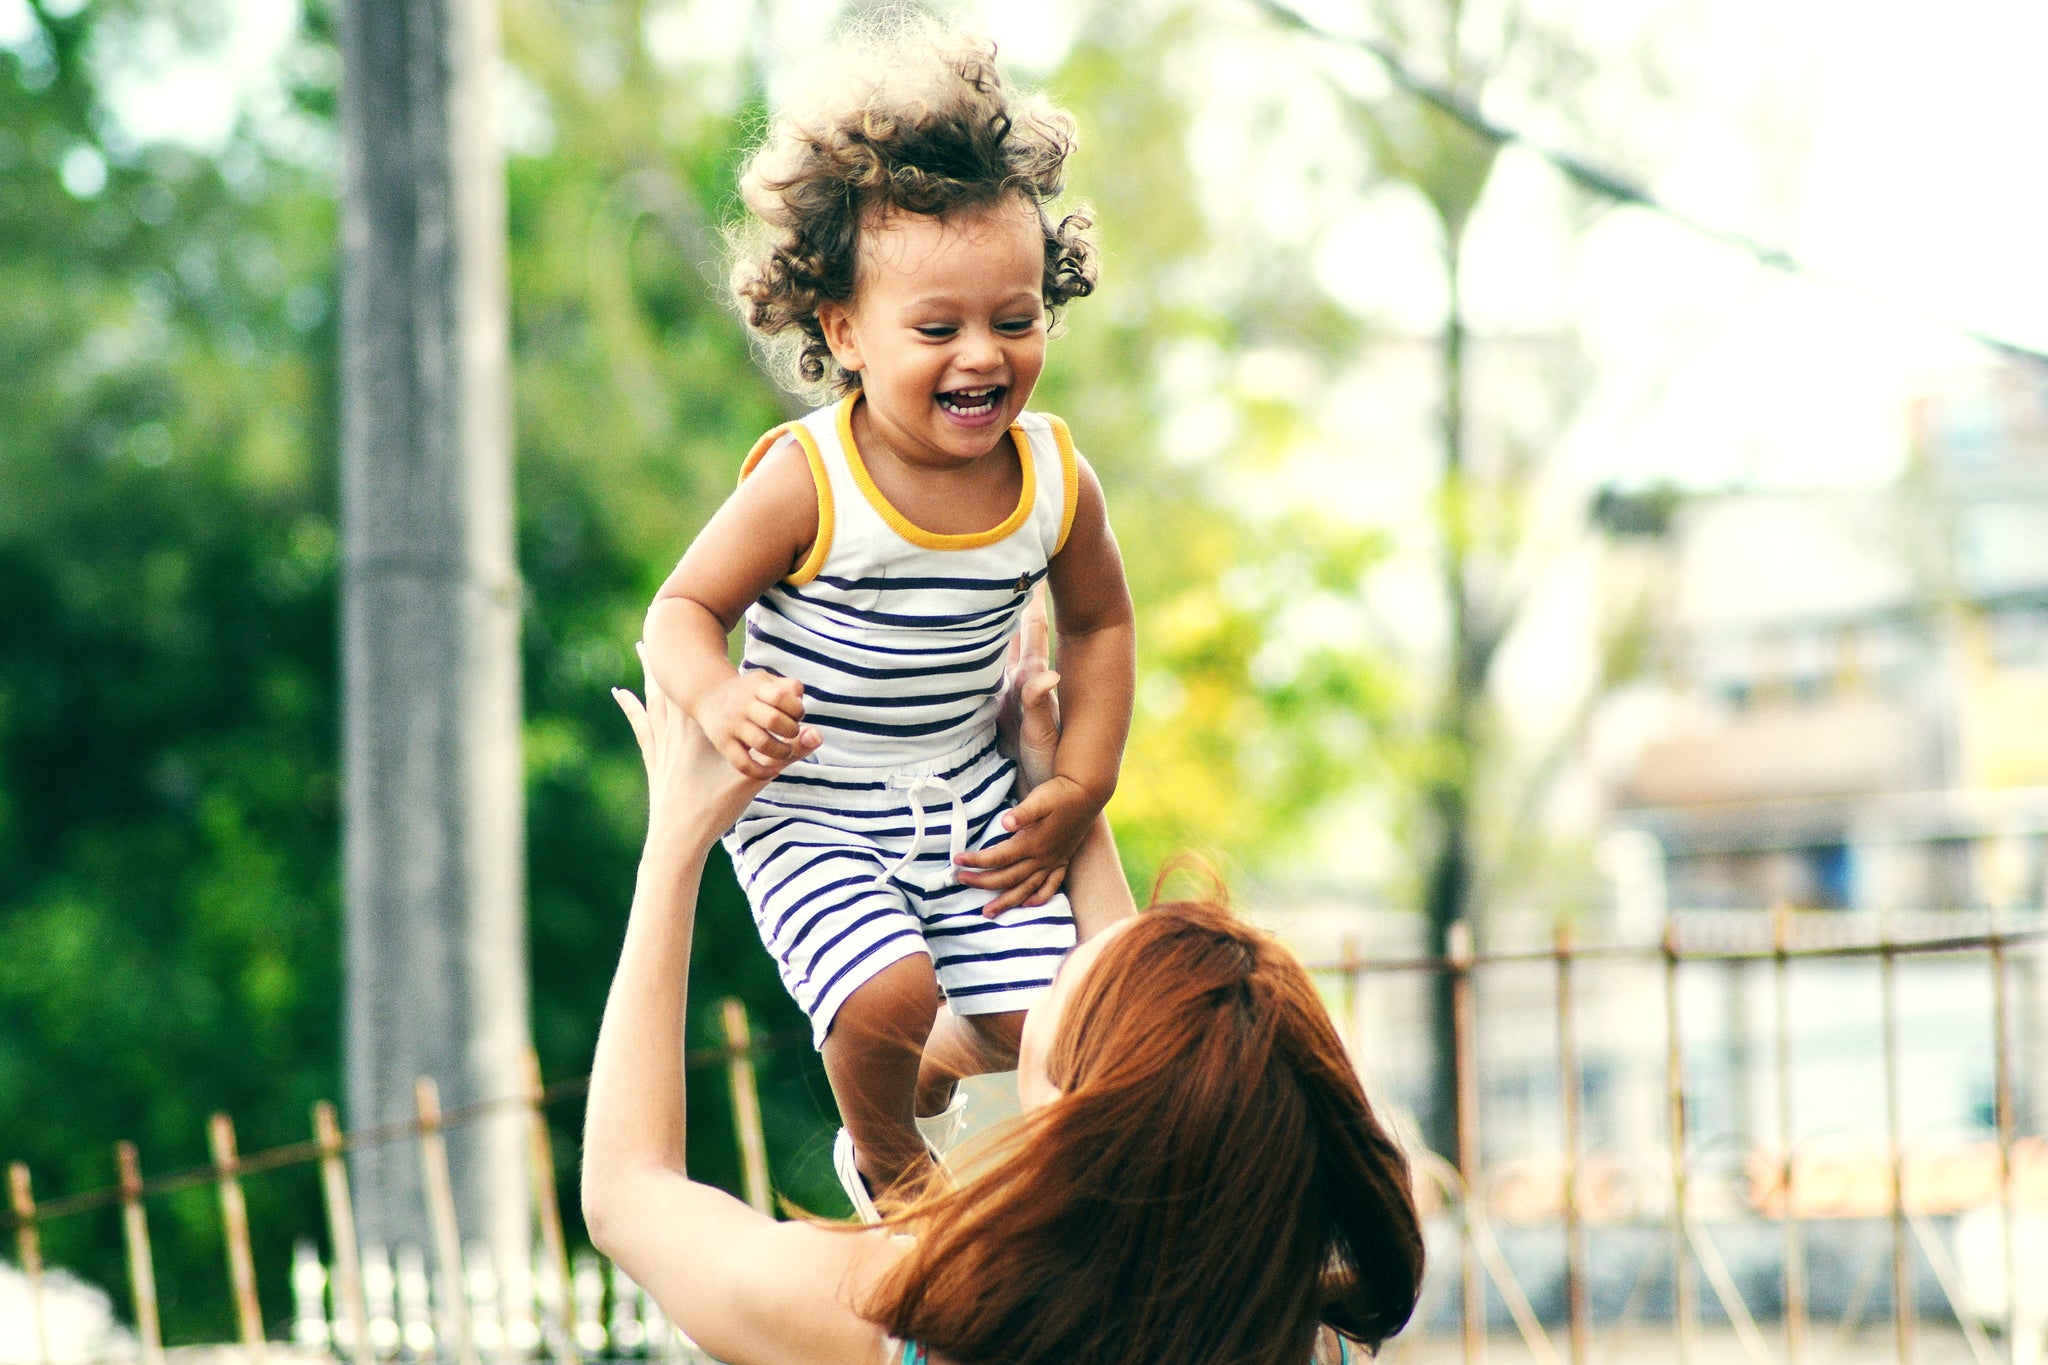 8 TIPS FOR AVOIDING PARENTAL EXHAUSTION